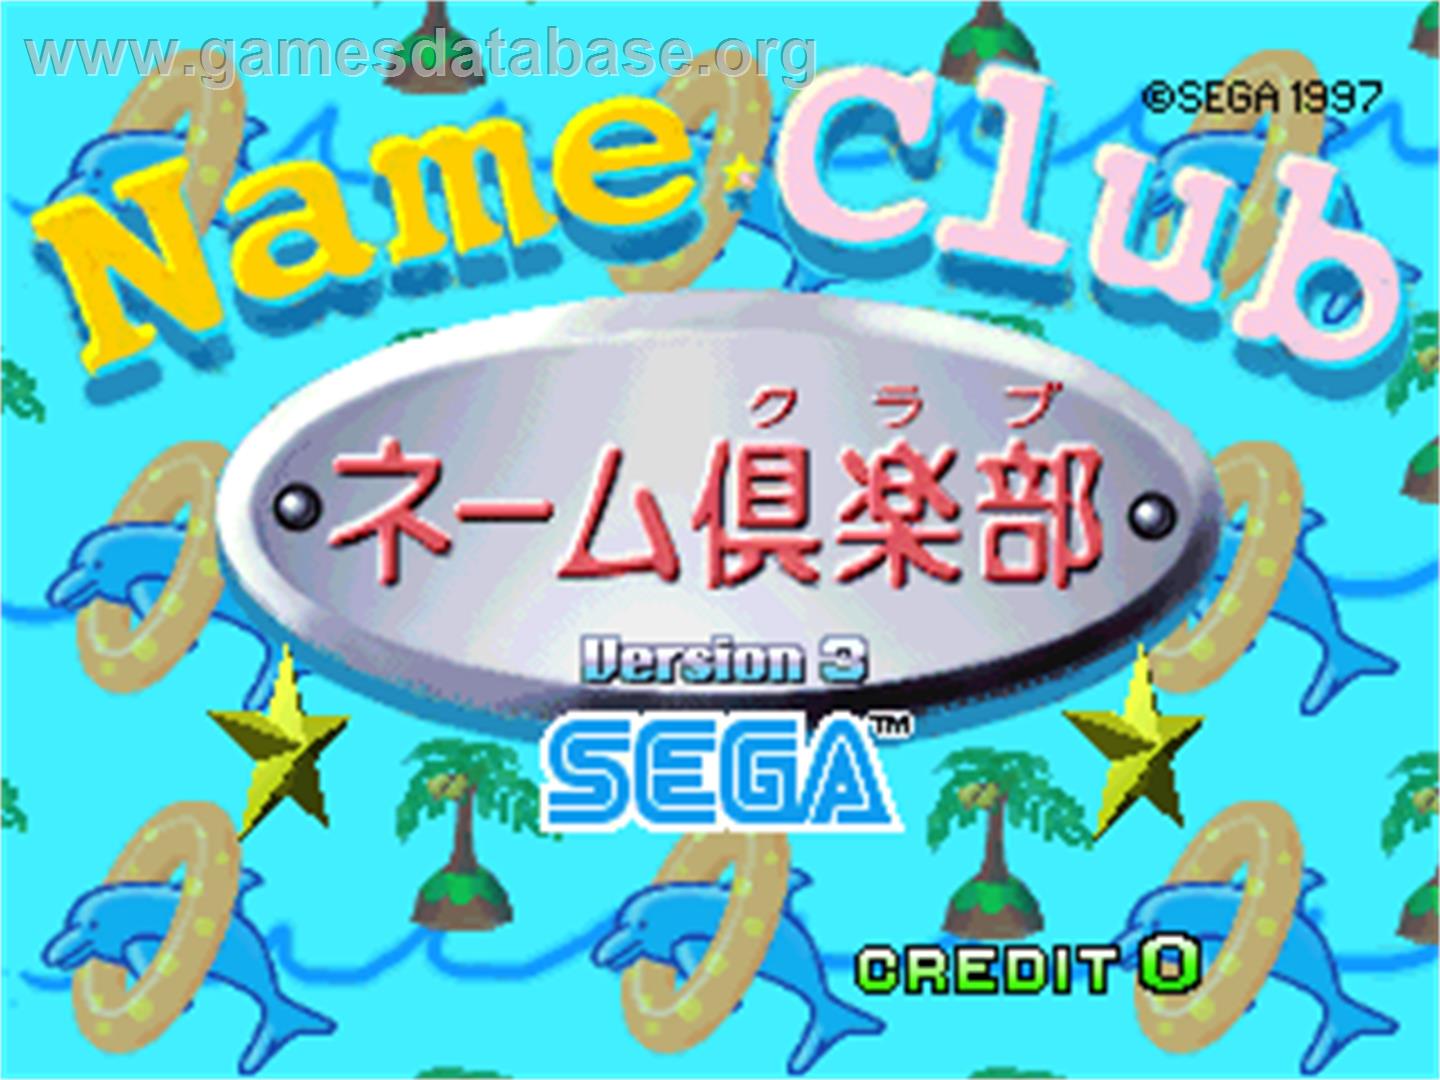 Name Club Ver.3 - Arcade - Artwork - Title Screen